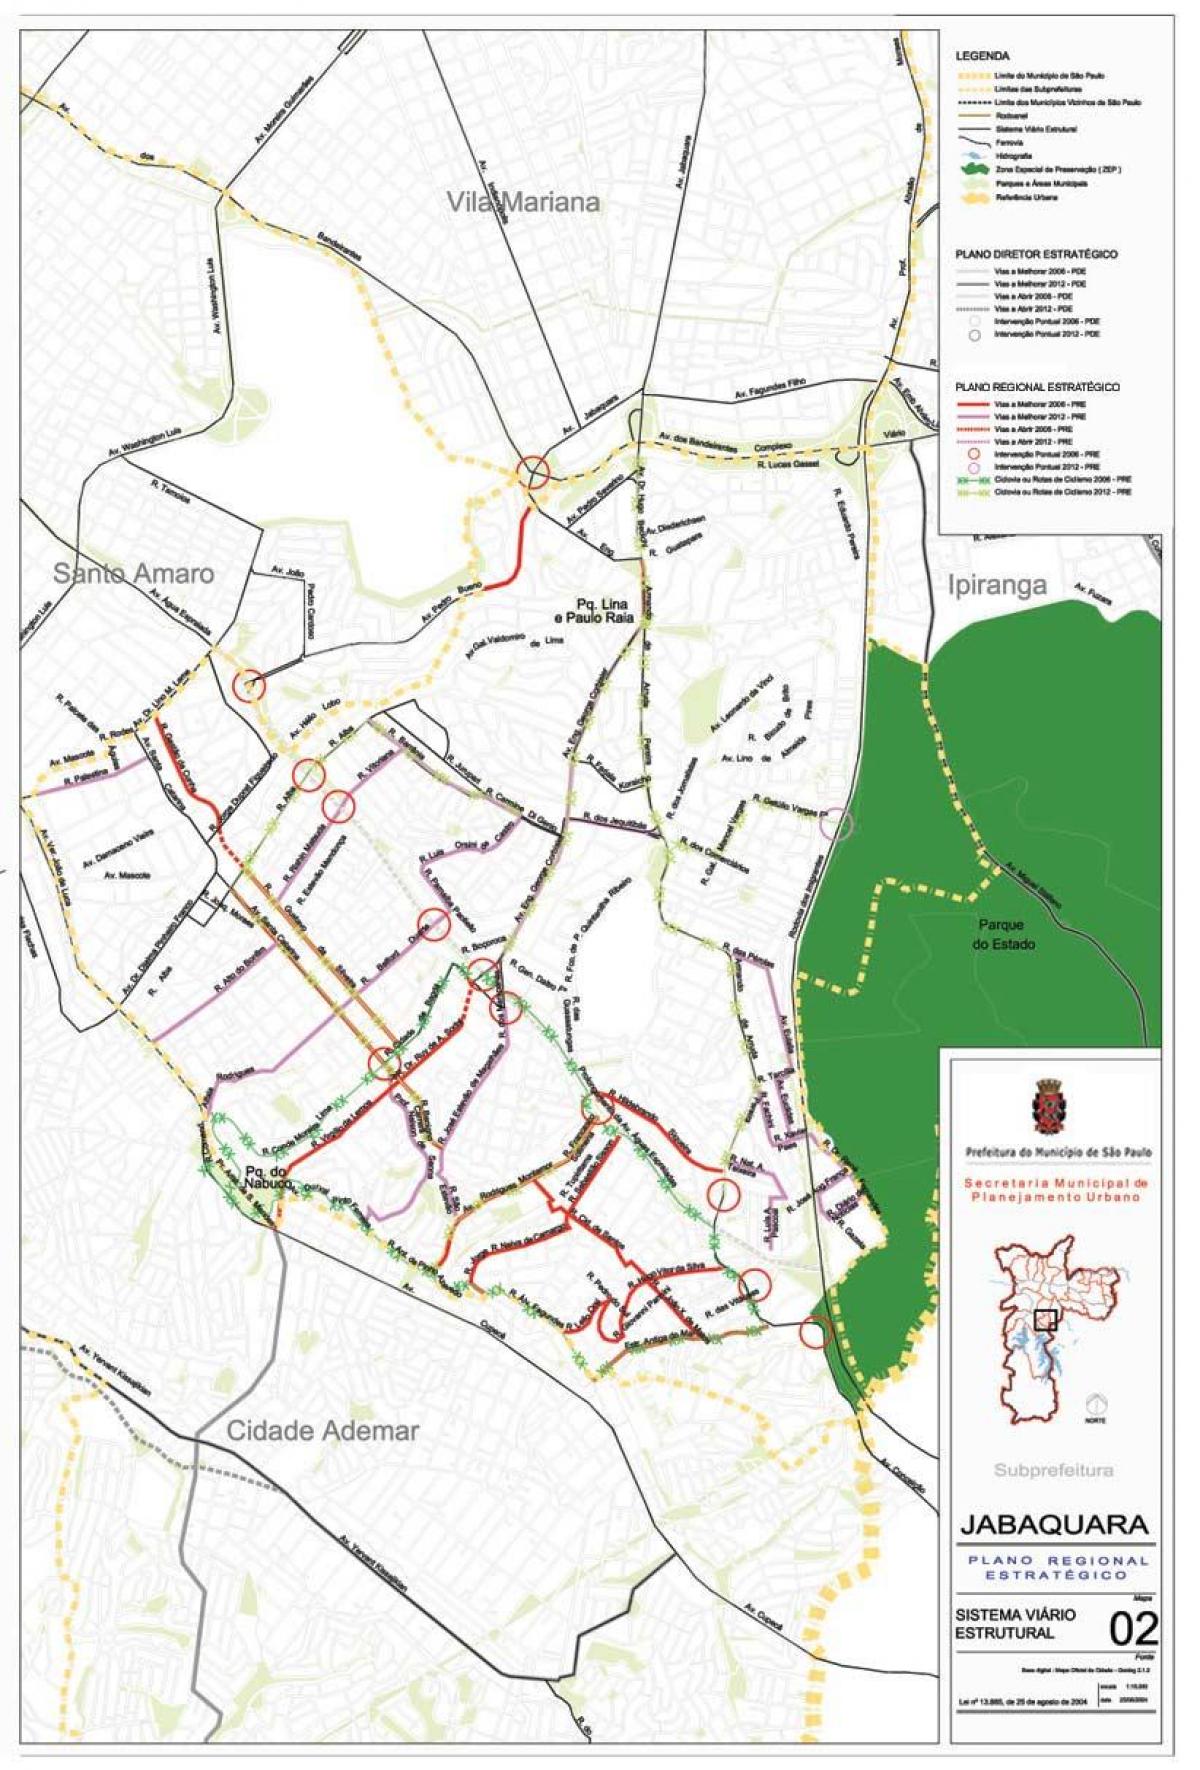 Map of Jabaquara São Paulo - Roads